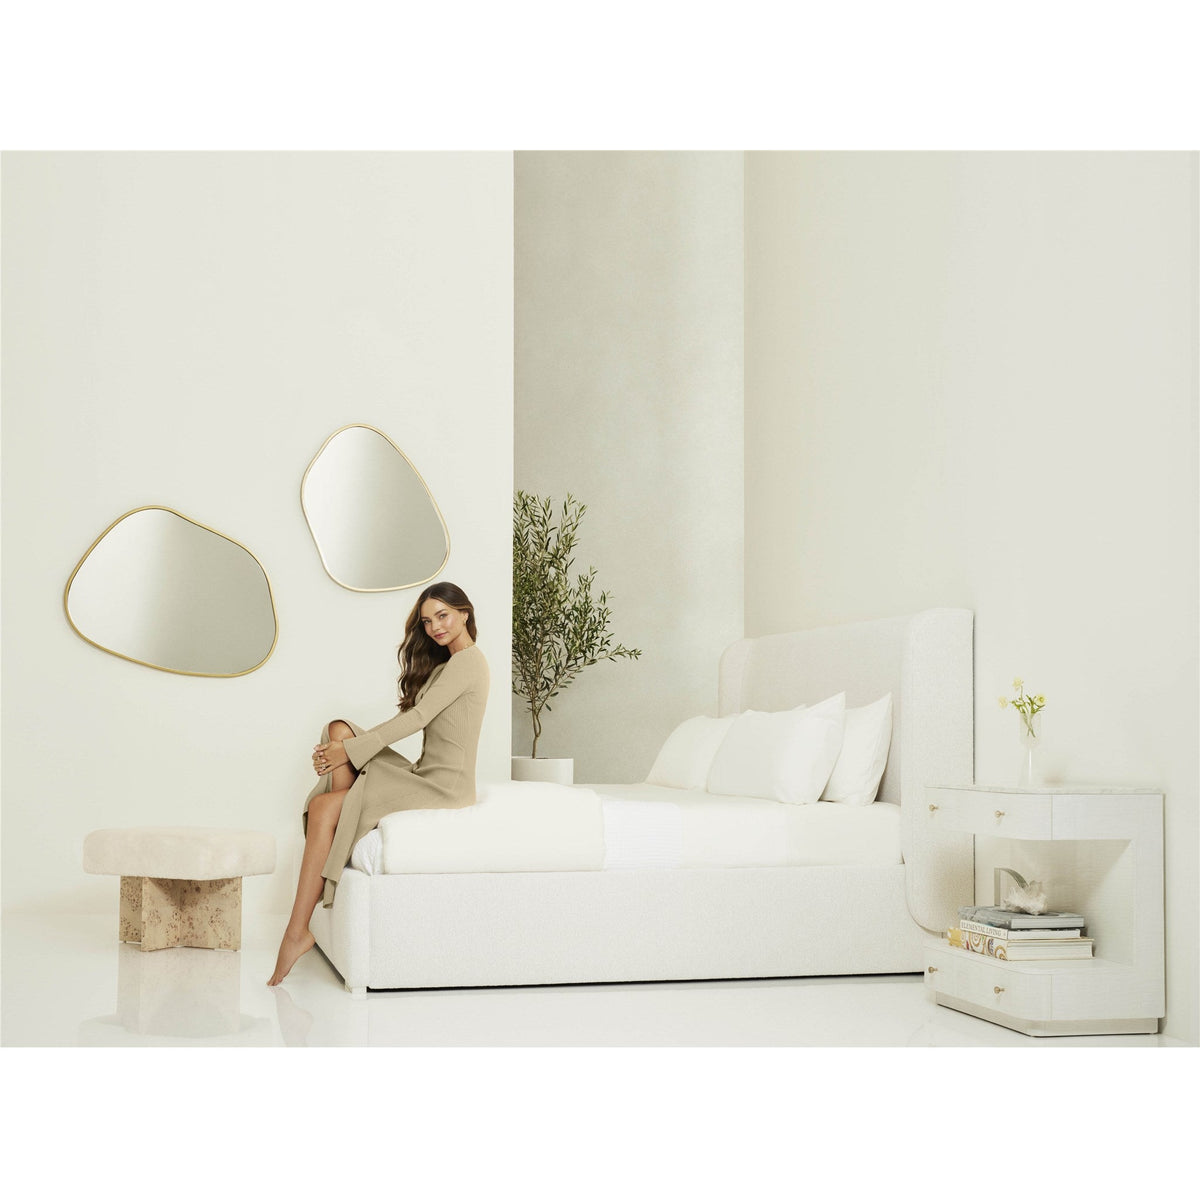 Gallett Accent Mirror Small - Be Bold Furniture